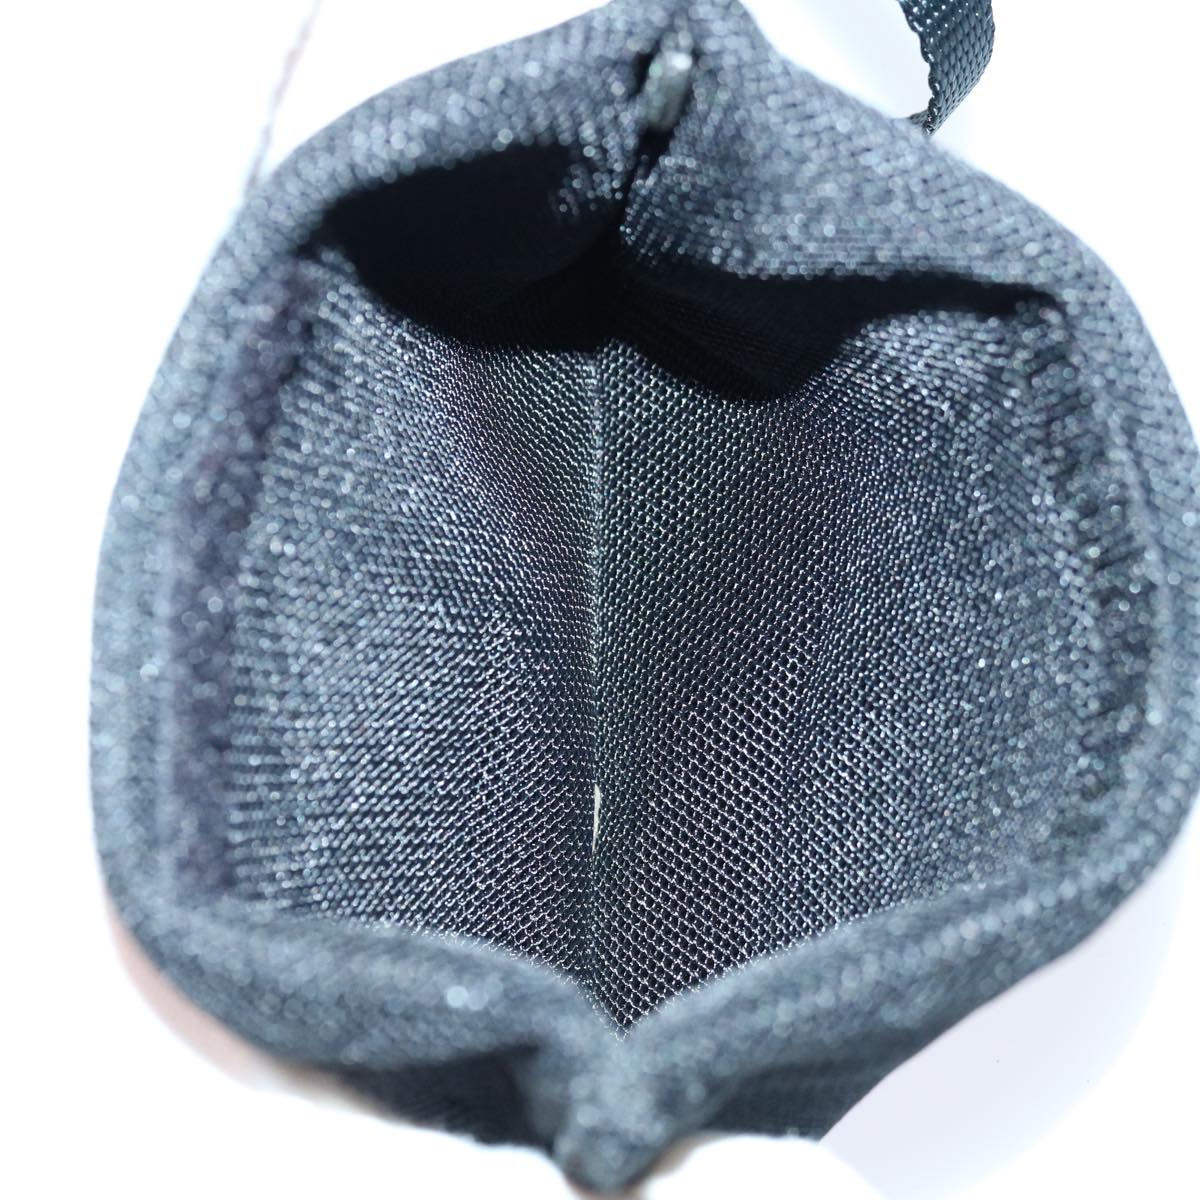 PRADA Tote Bag Nylon Black Auth 66592